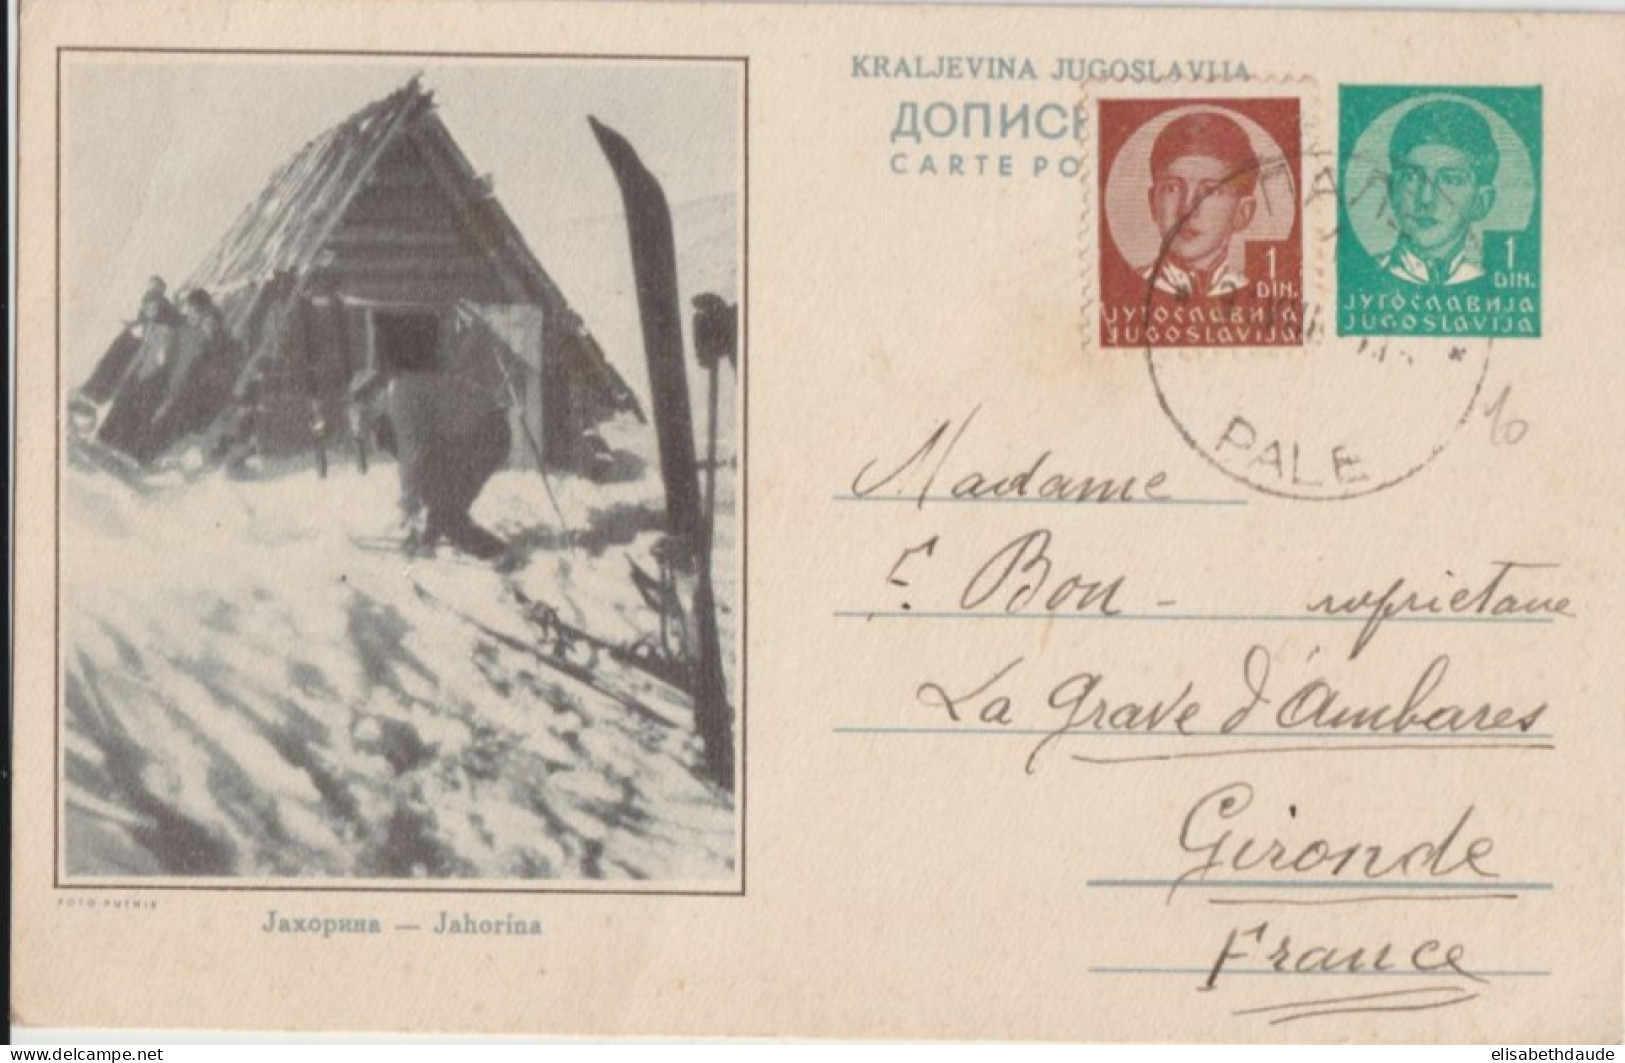 YOUGOSLAVIE - 1937 - CP ENTIER ILLUSTREE BILDPOSTKARTE (JAHORINA) De PALE (BOSNIE) => LA GRAVE D'AMBARES - Postal Stationery